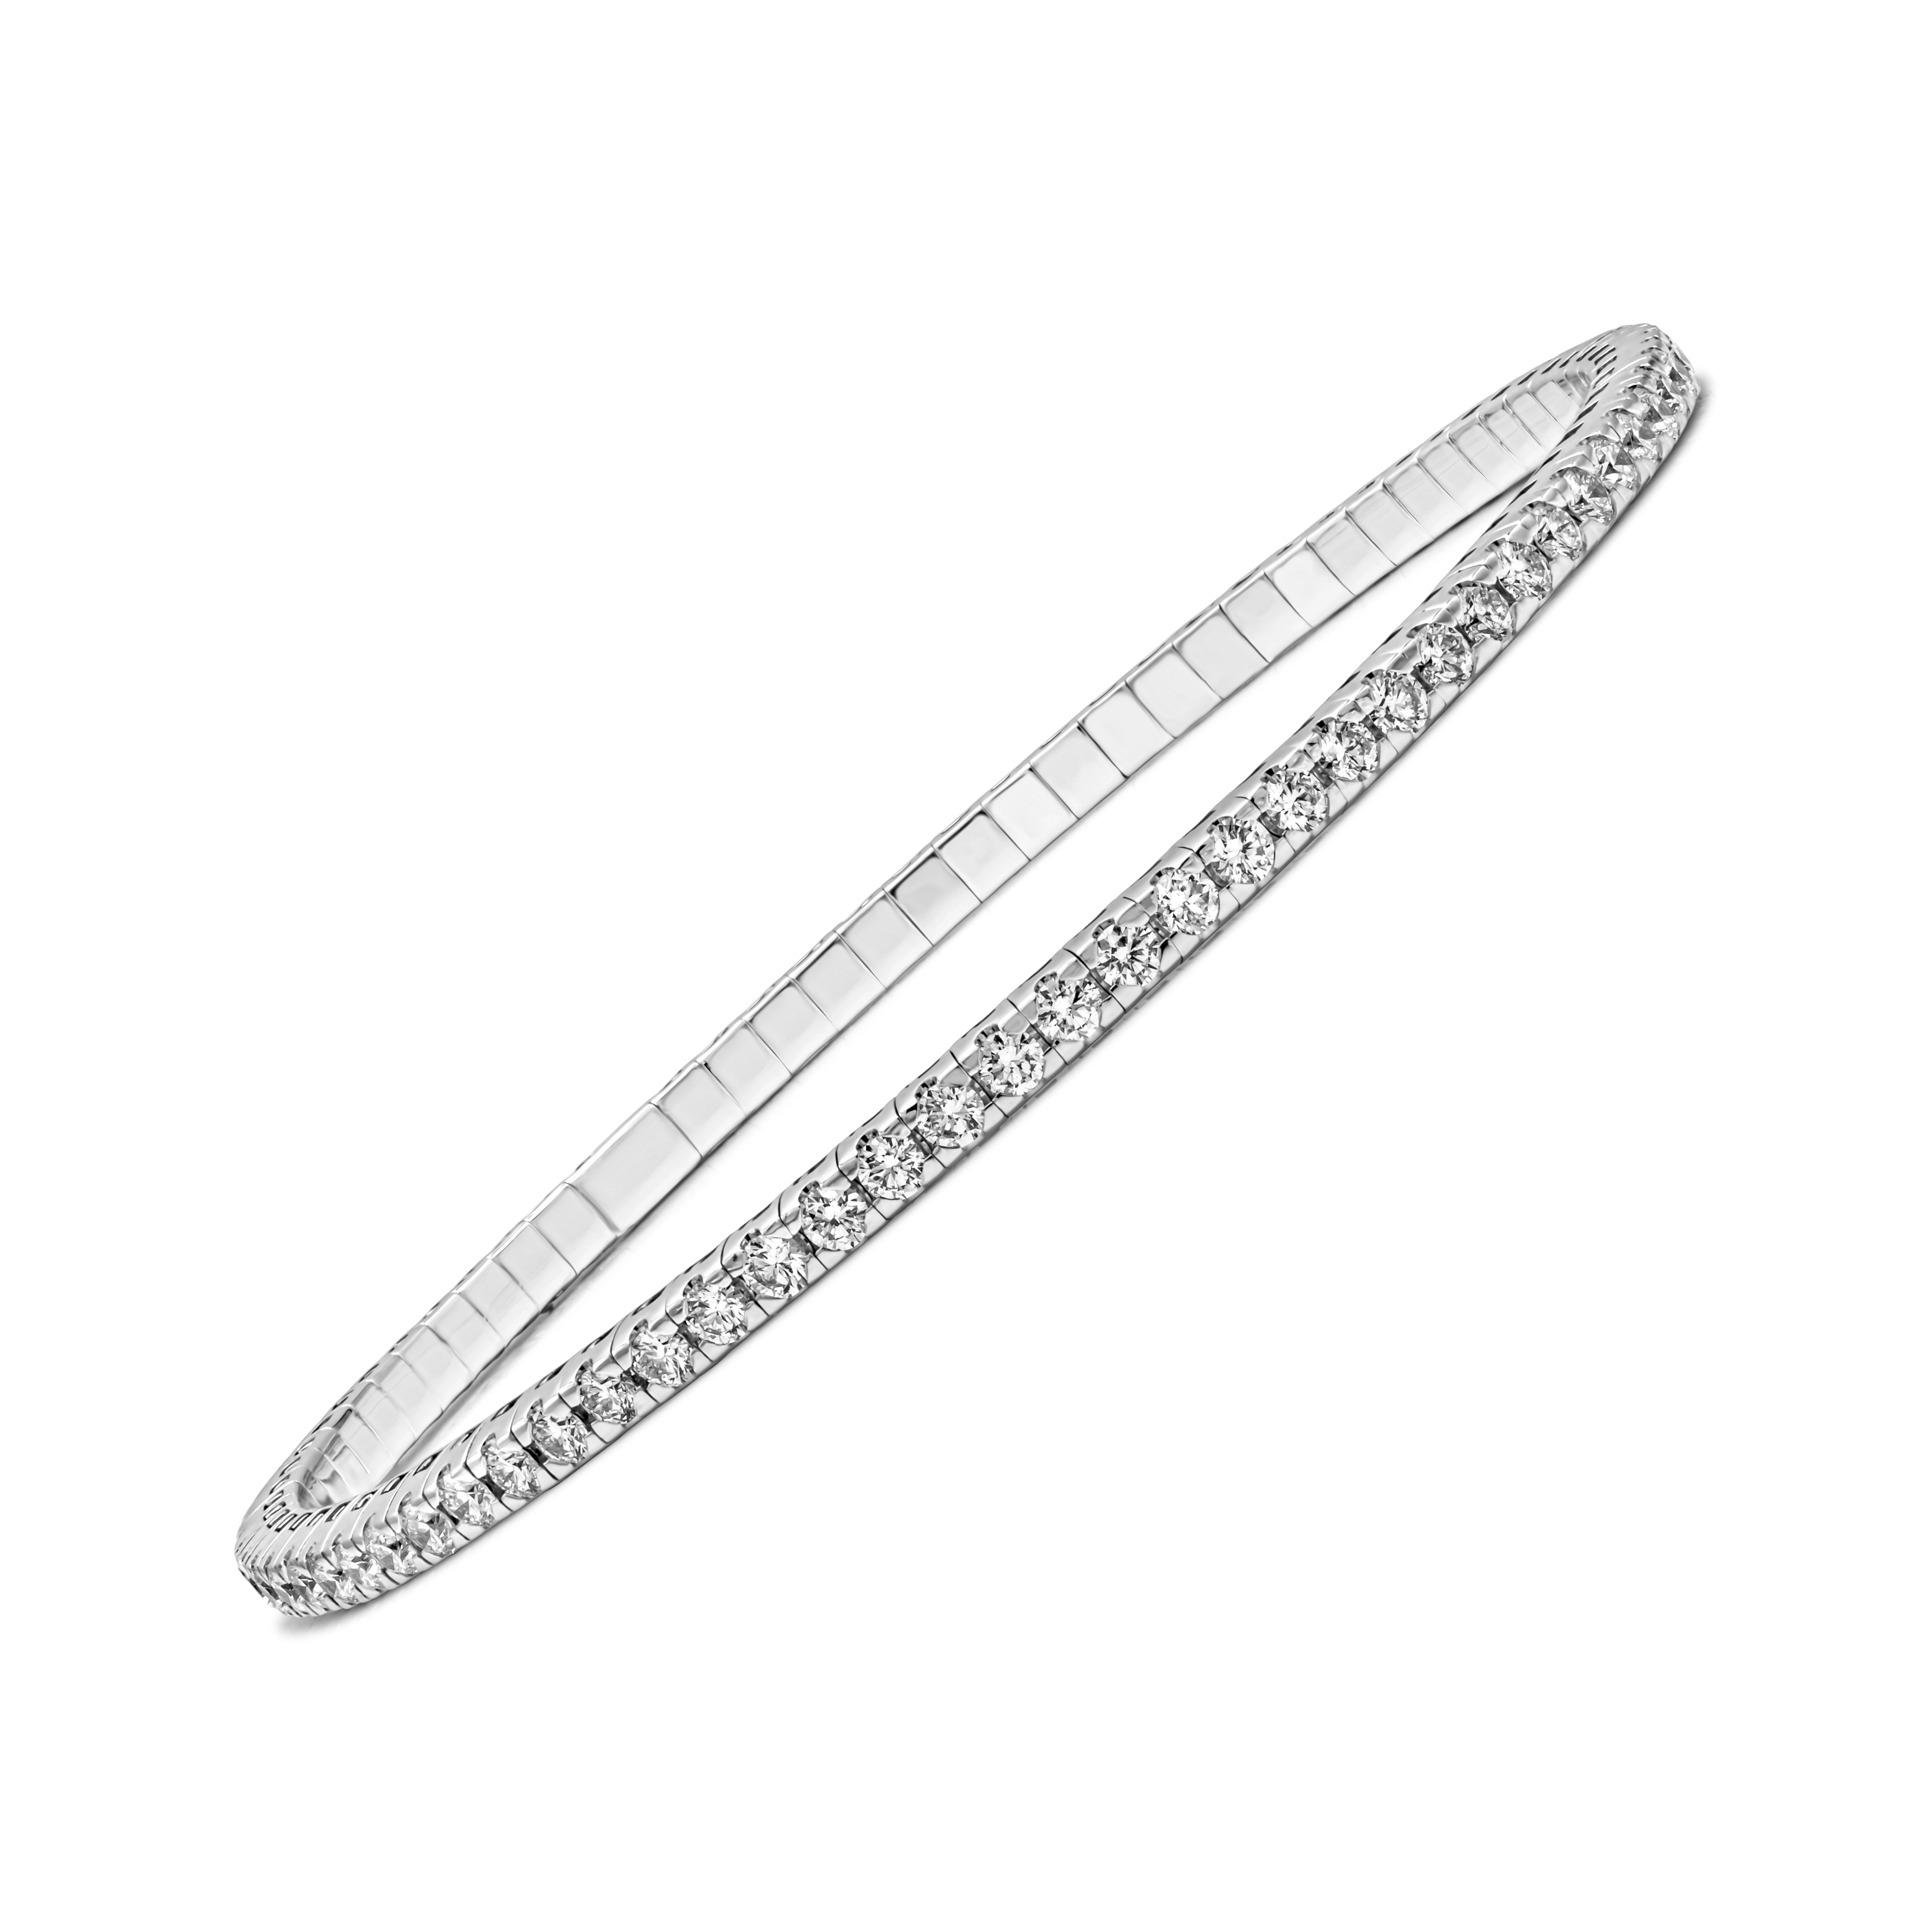 Roman Malakov 2.54 Carats Total Round Cut Diamond Stretchable Tennis Bracelet For Sale